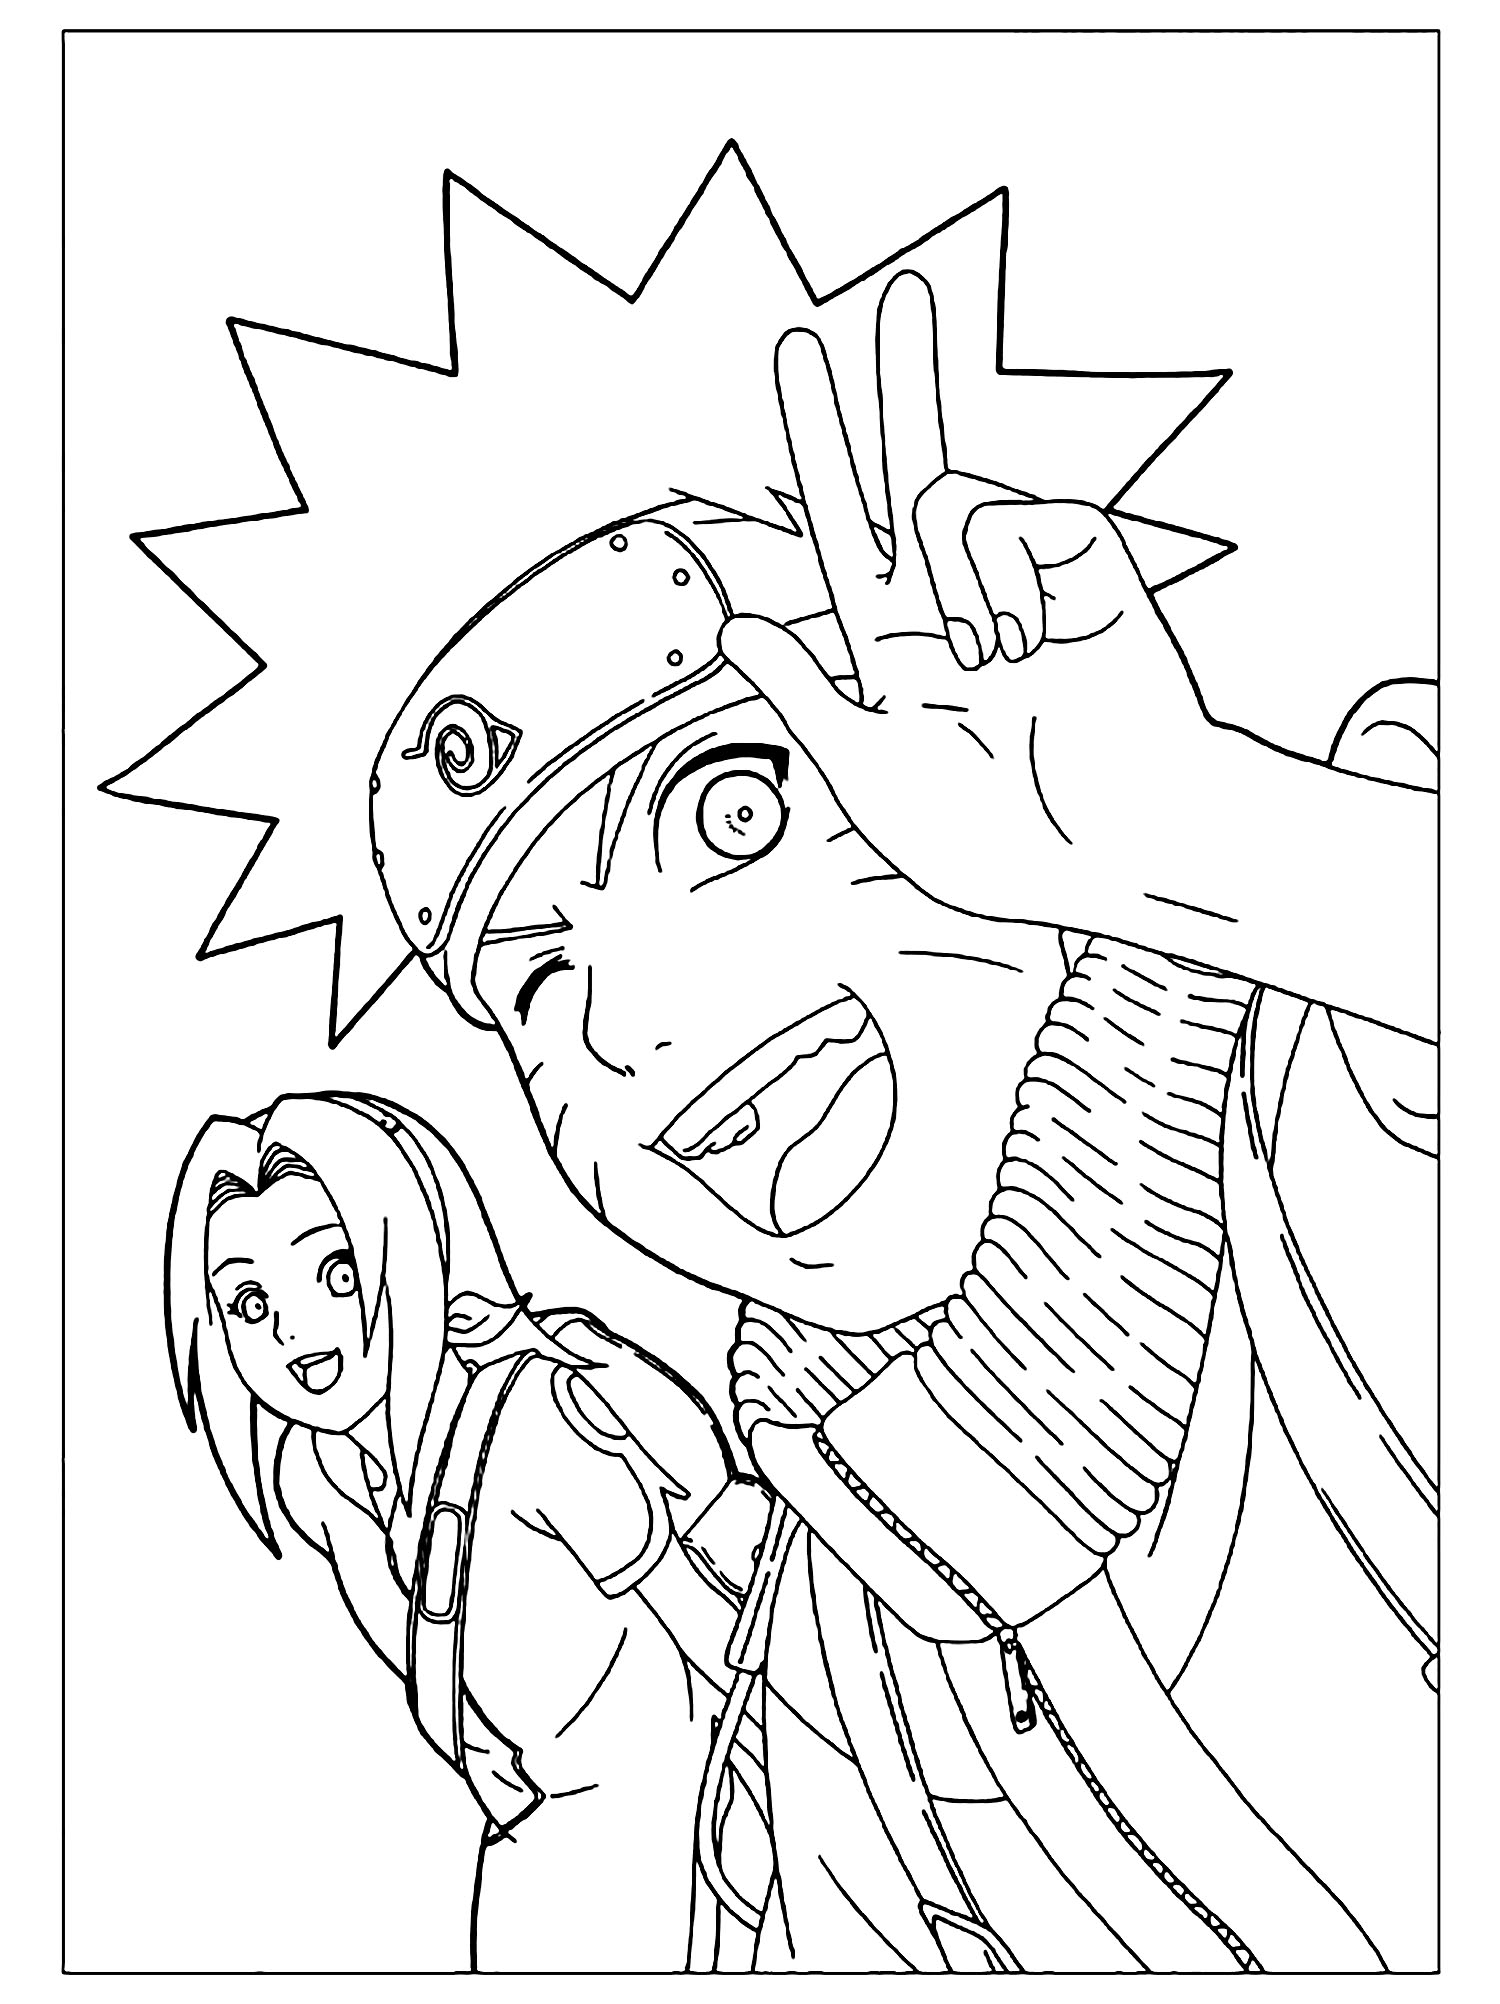 Naruto vous fait signe !